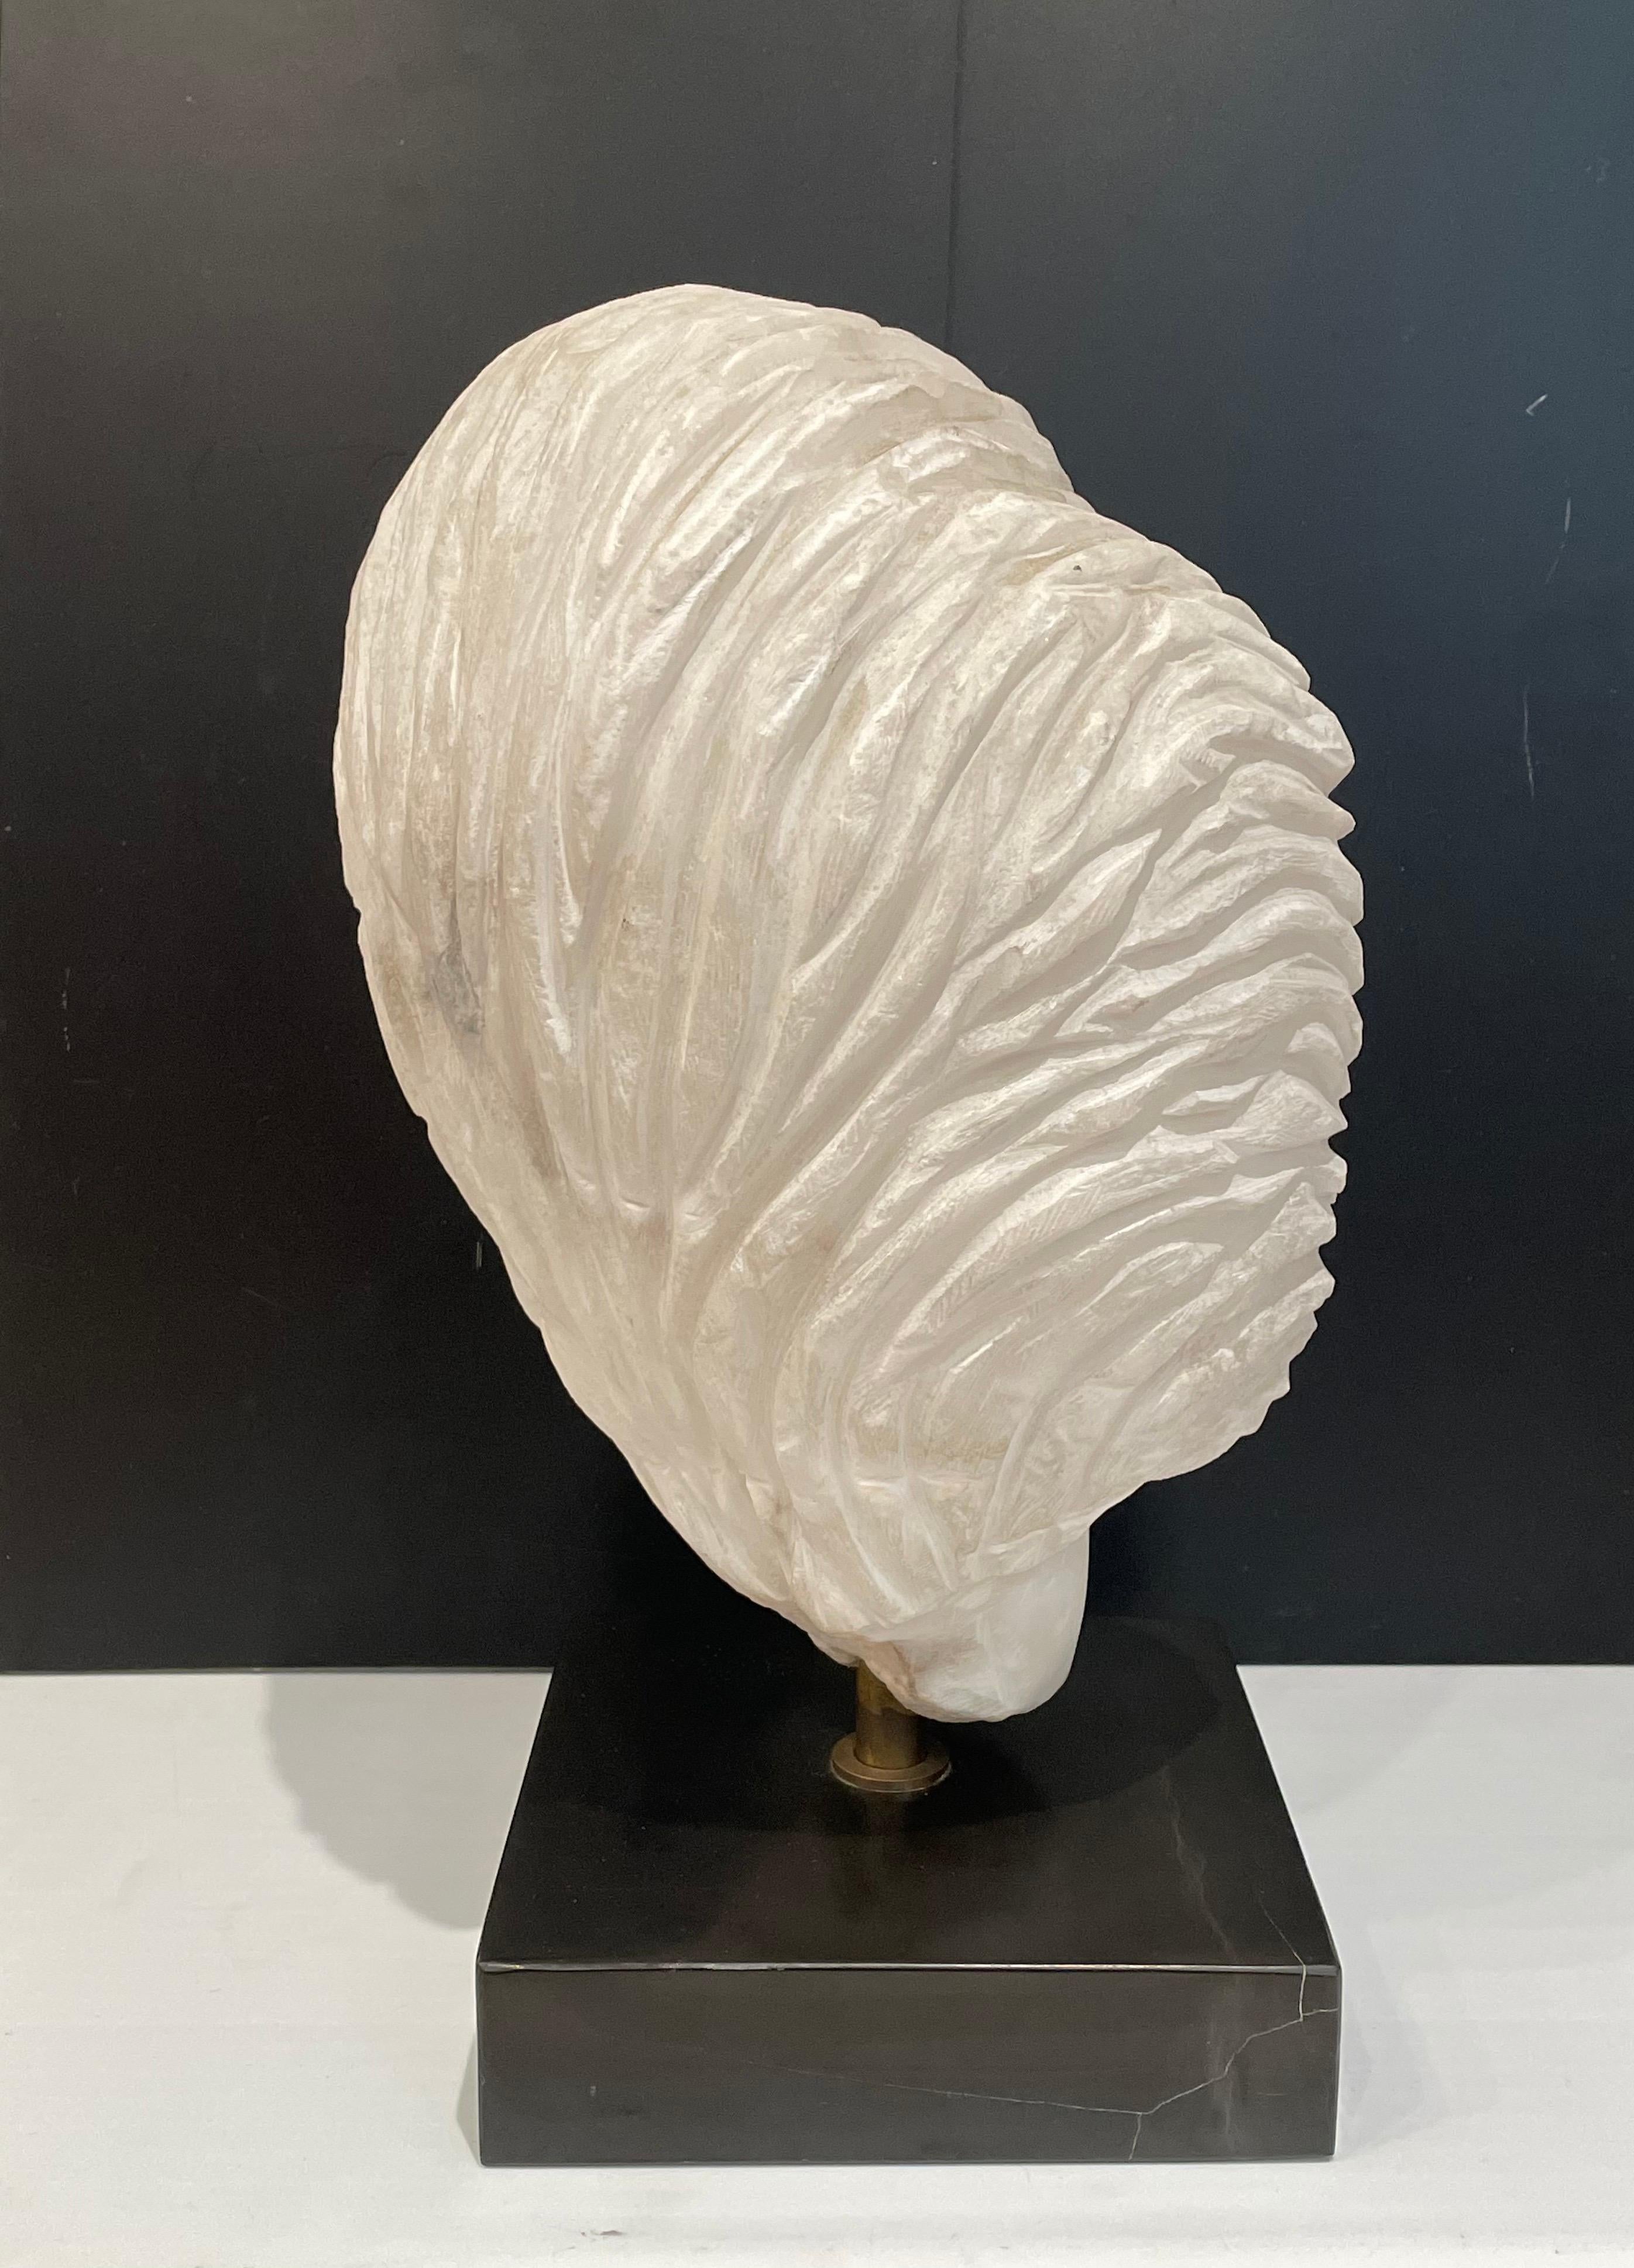 Italian Alabaster Woman's Head Sculpture on Marble Base Rotates 360 Degree